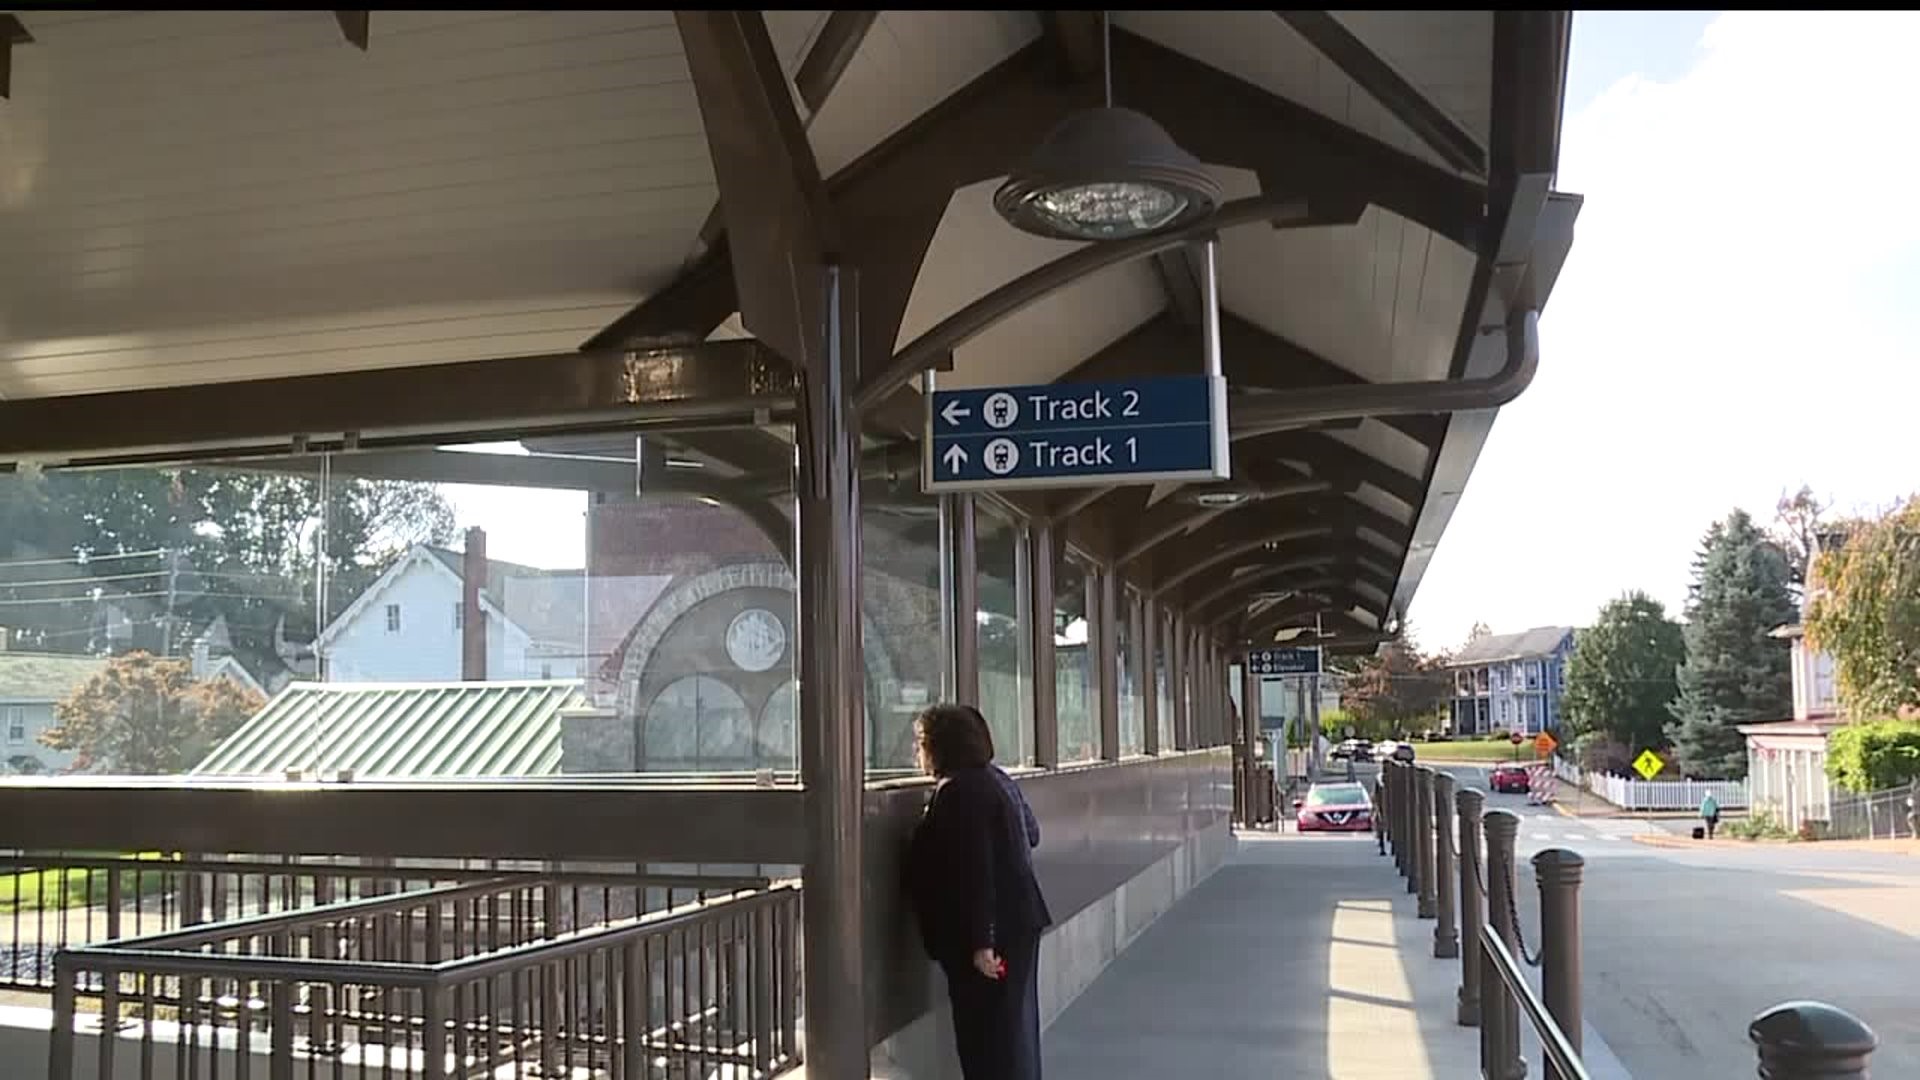 PennDOT unveils new Amtrak station for Keystone Line in Mount Joy